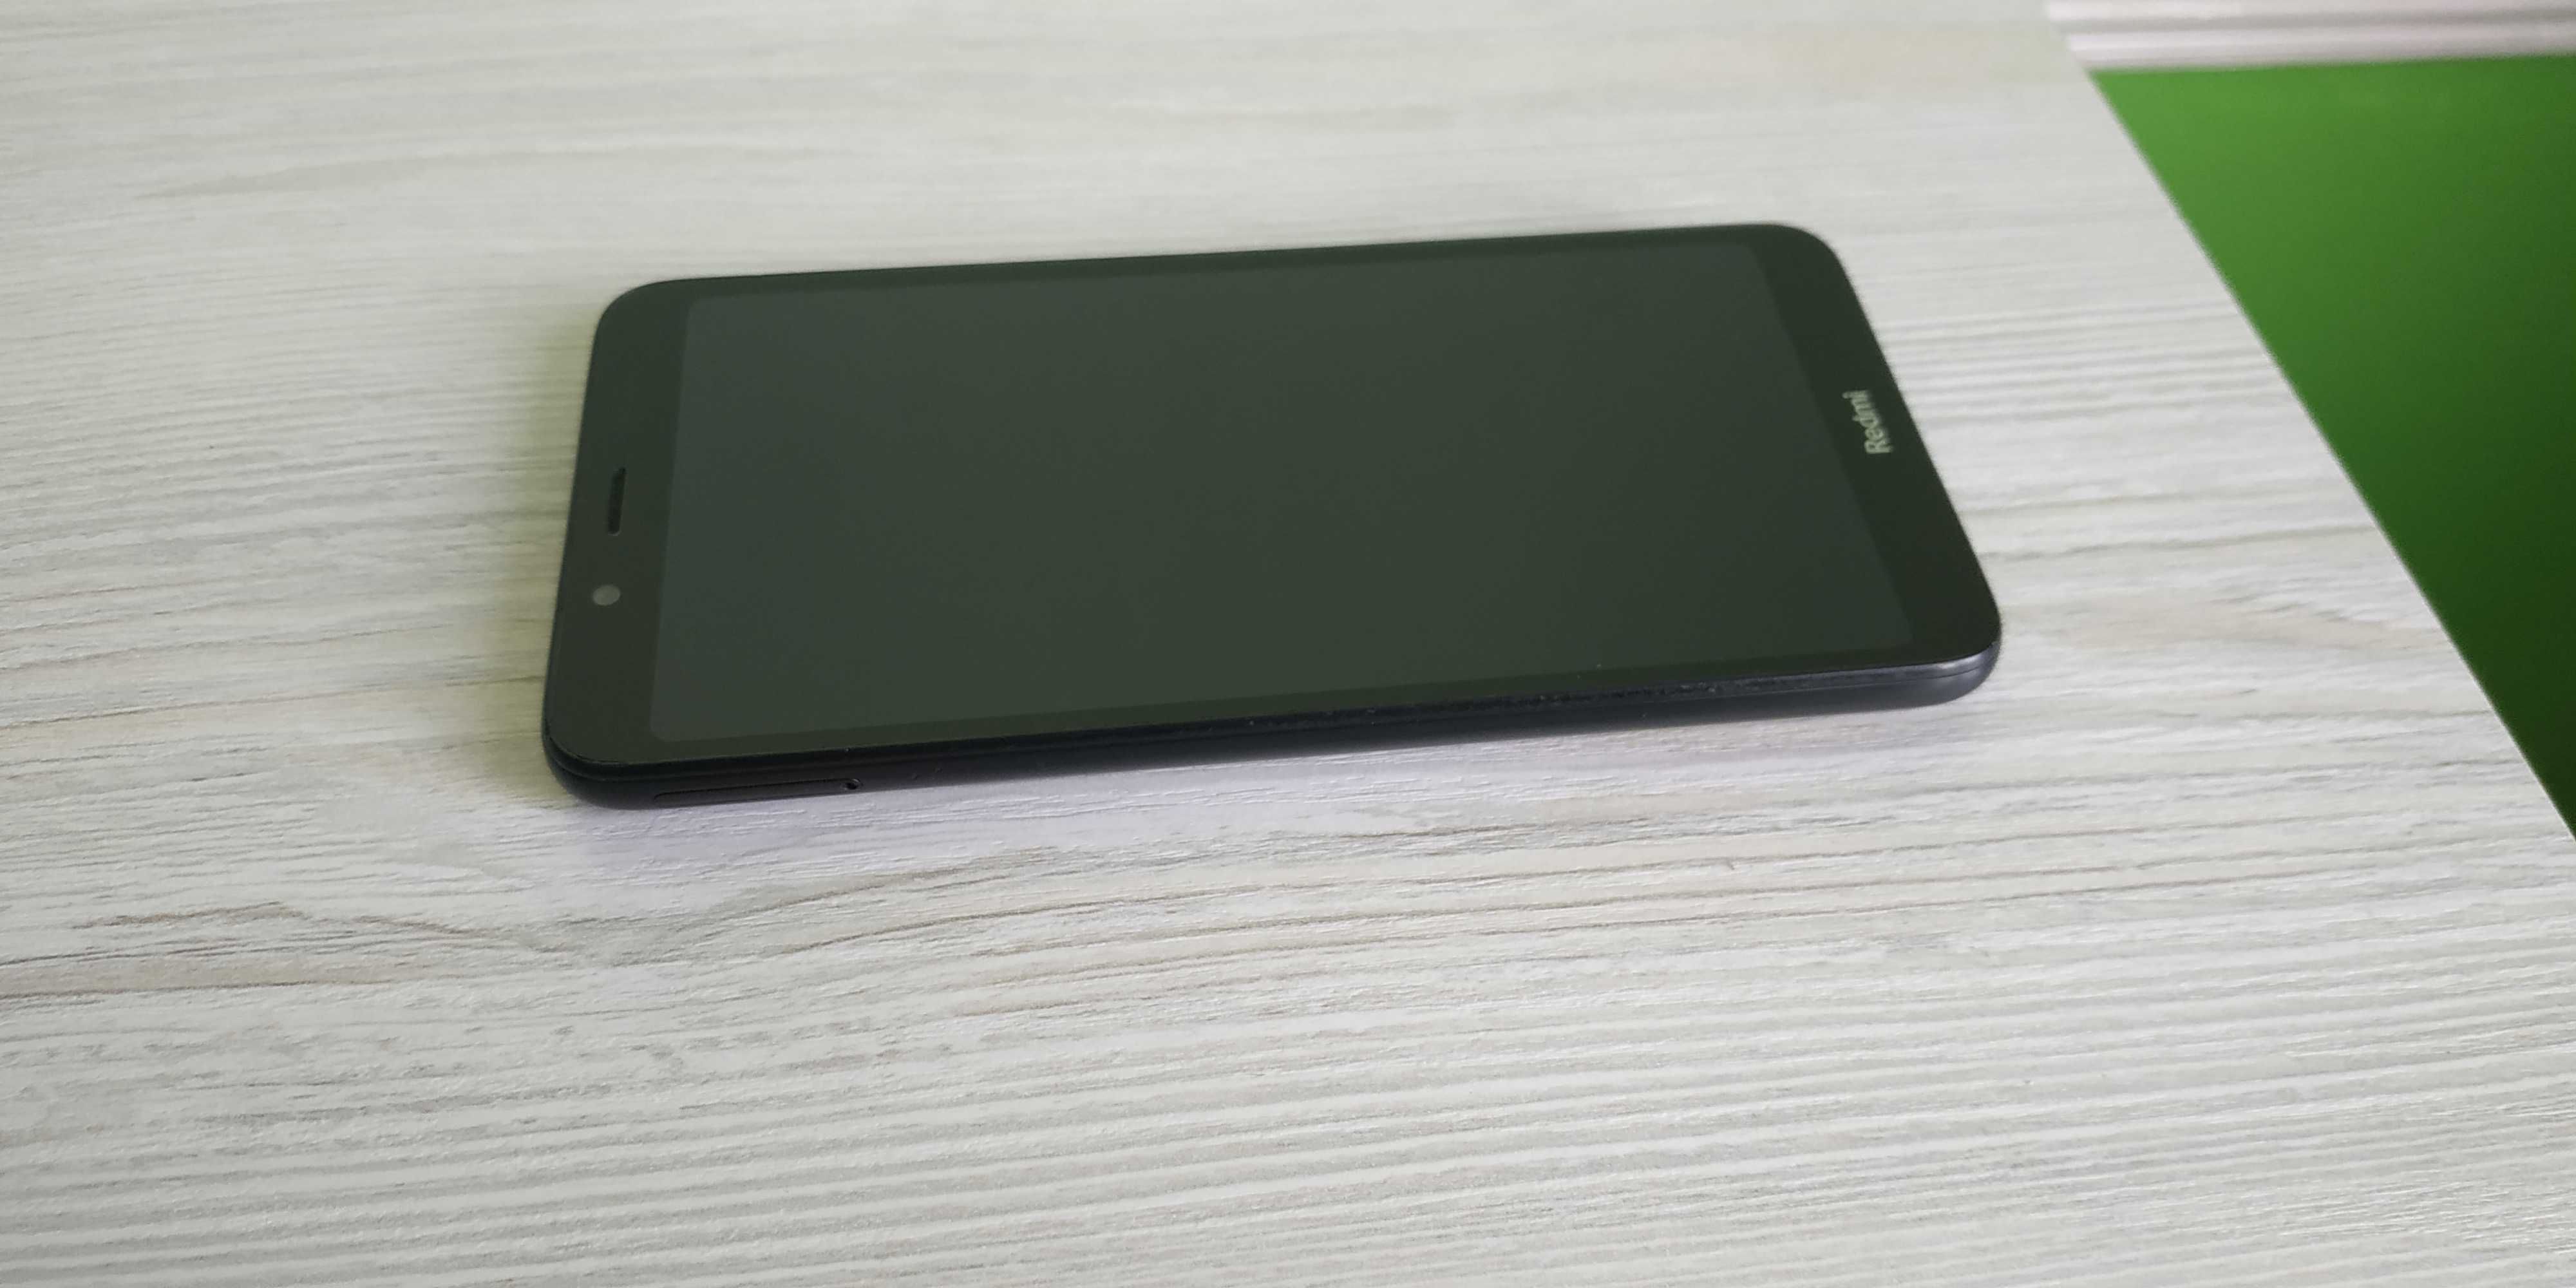 Sotiladi Xiaomi Redmi 7A